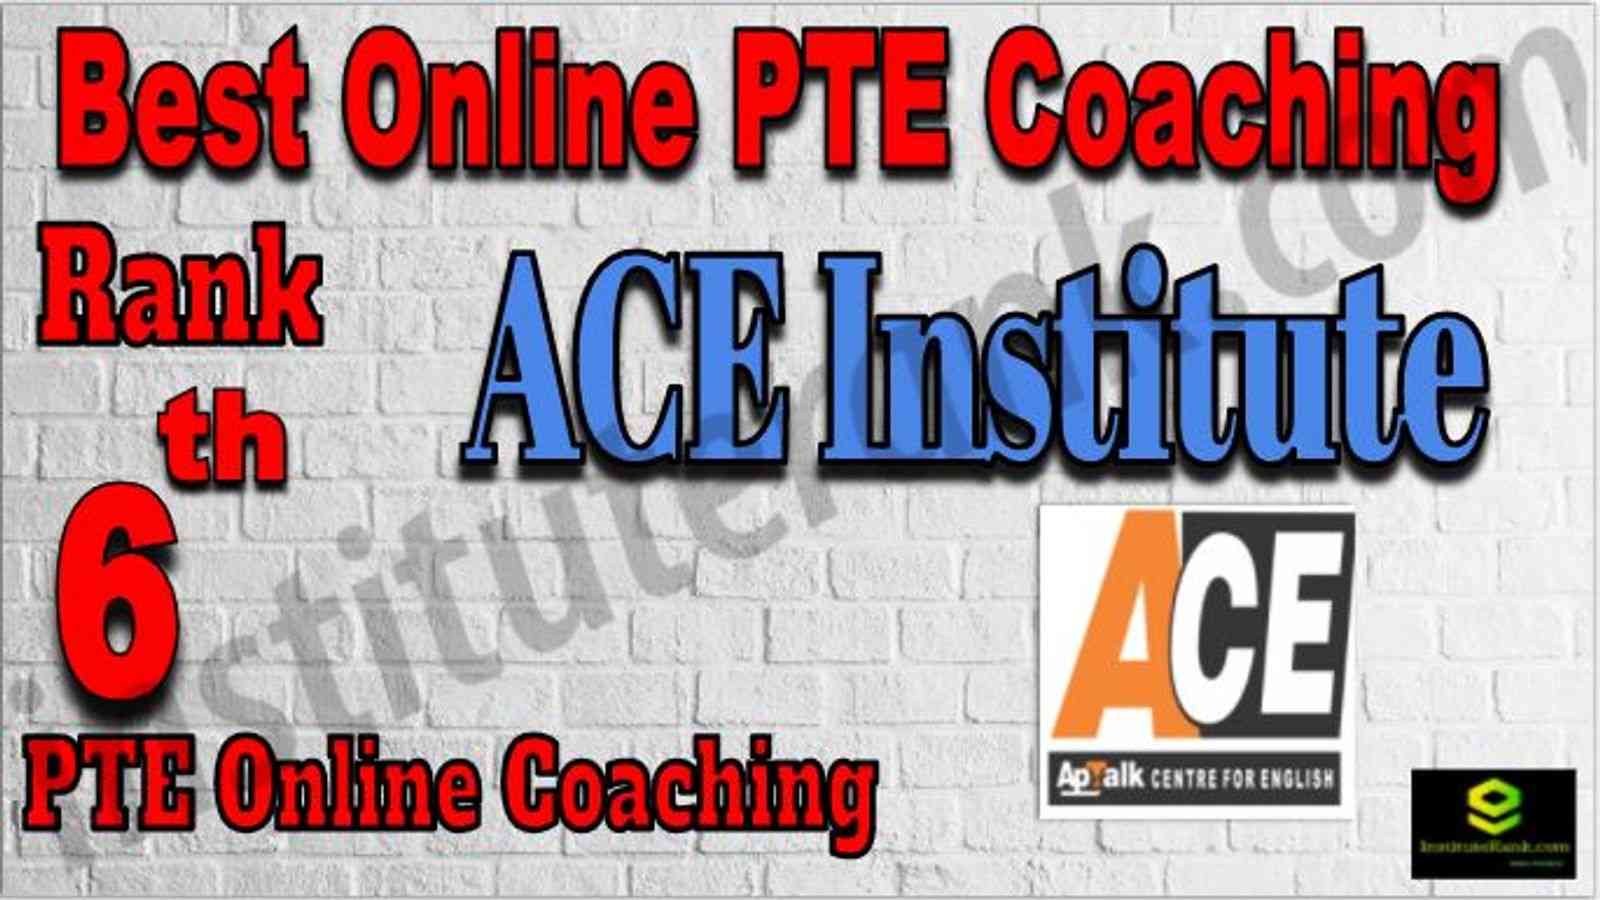 Rank 6 Best Online PTE Coaching